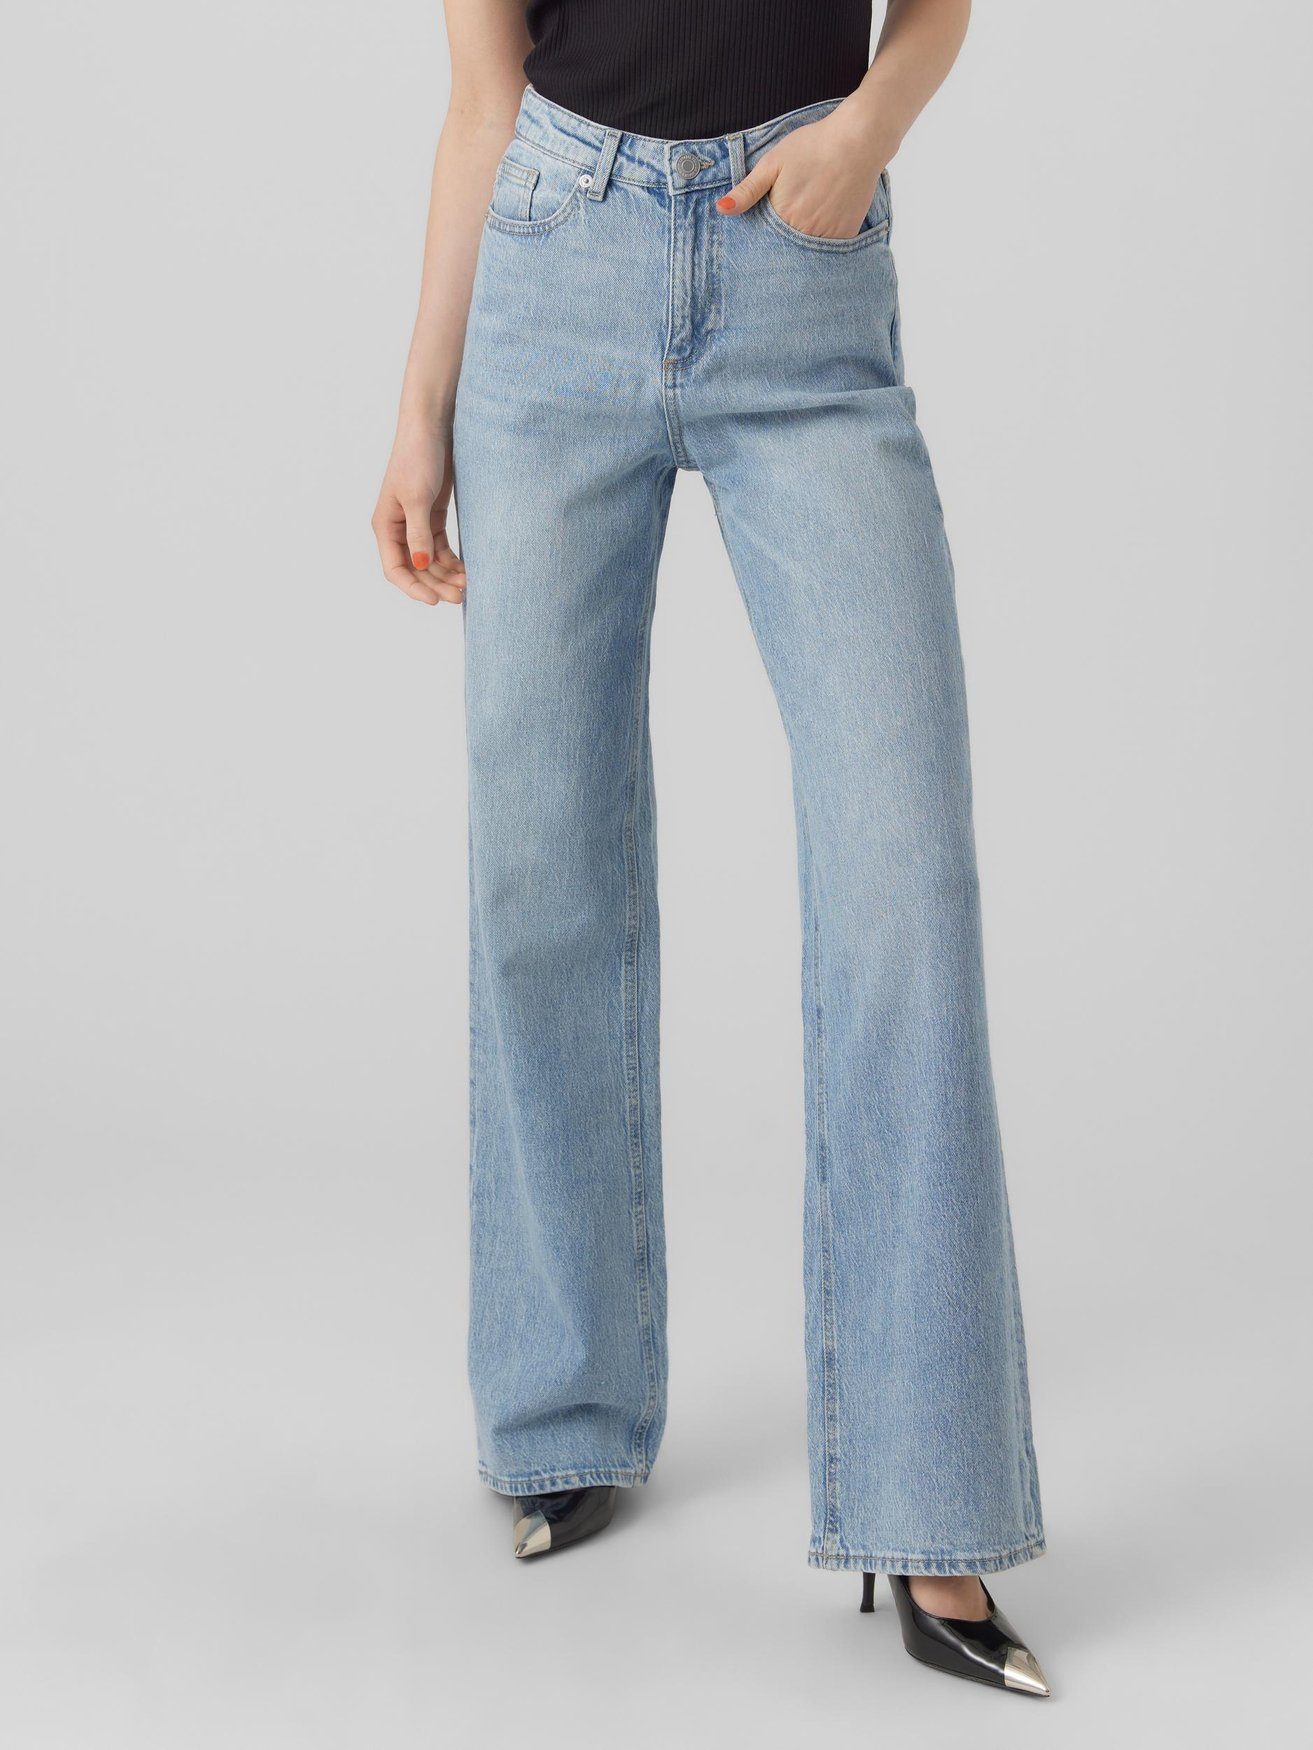 Moda VMTESSA in Fit 5973 Jeans Denim Schlagjeans Straight Stone Hellblau Vero Washed